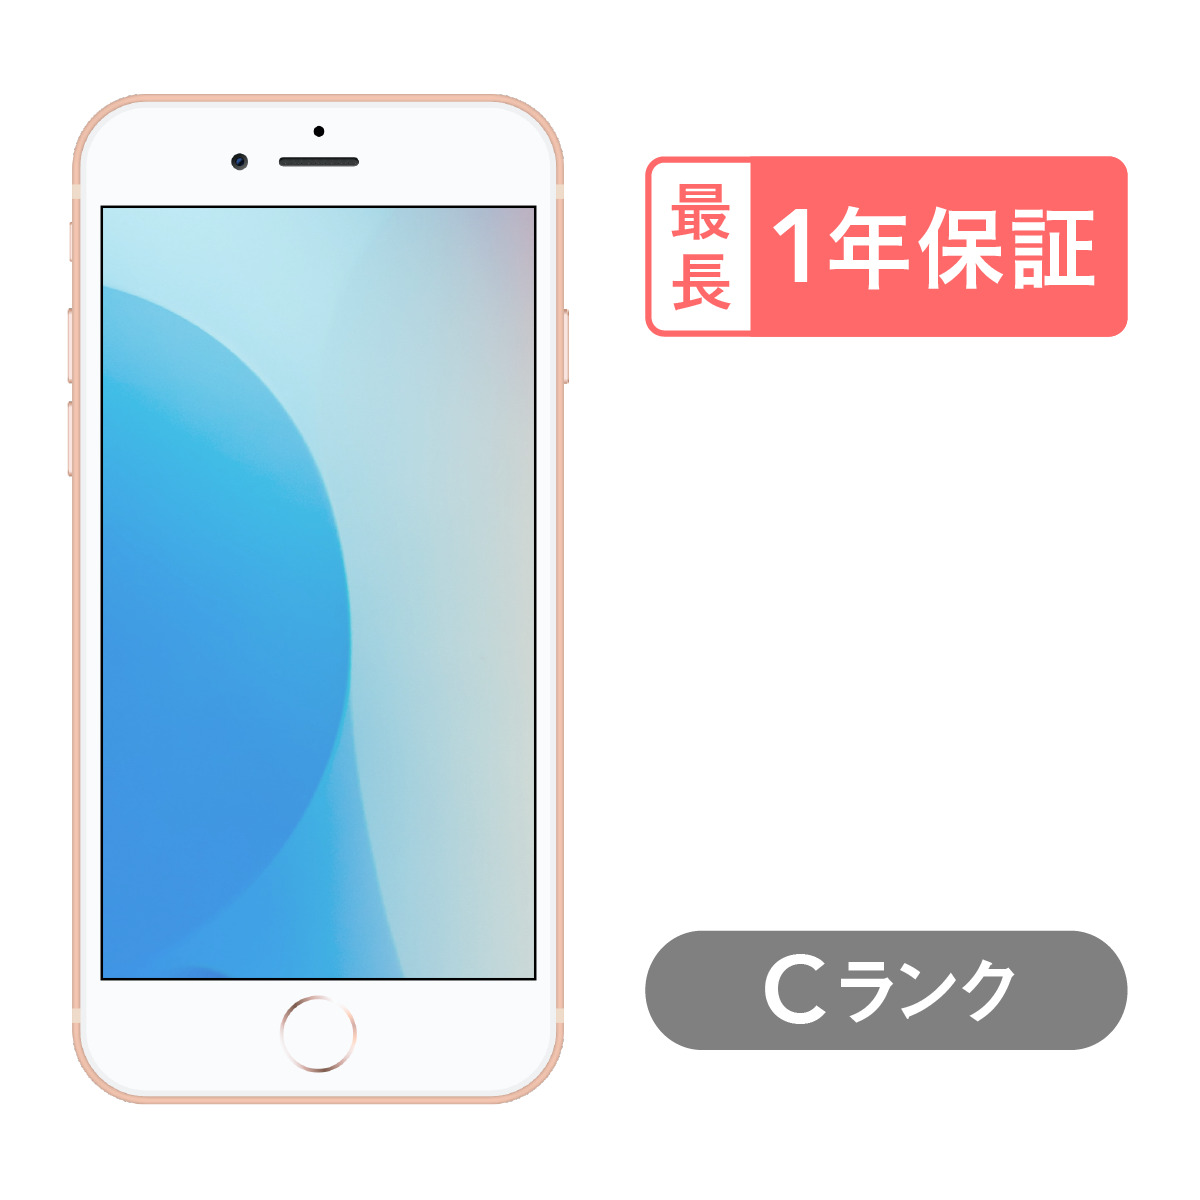 iPhone 8 Plus 64GB 中古 SIMフリー ゴールド レッド シルバー スペースグレイ docomo au softbank